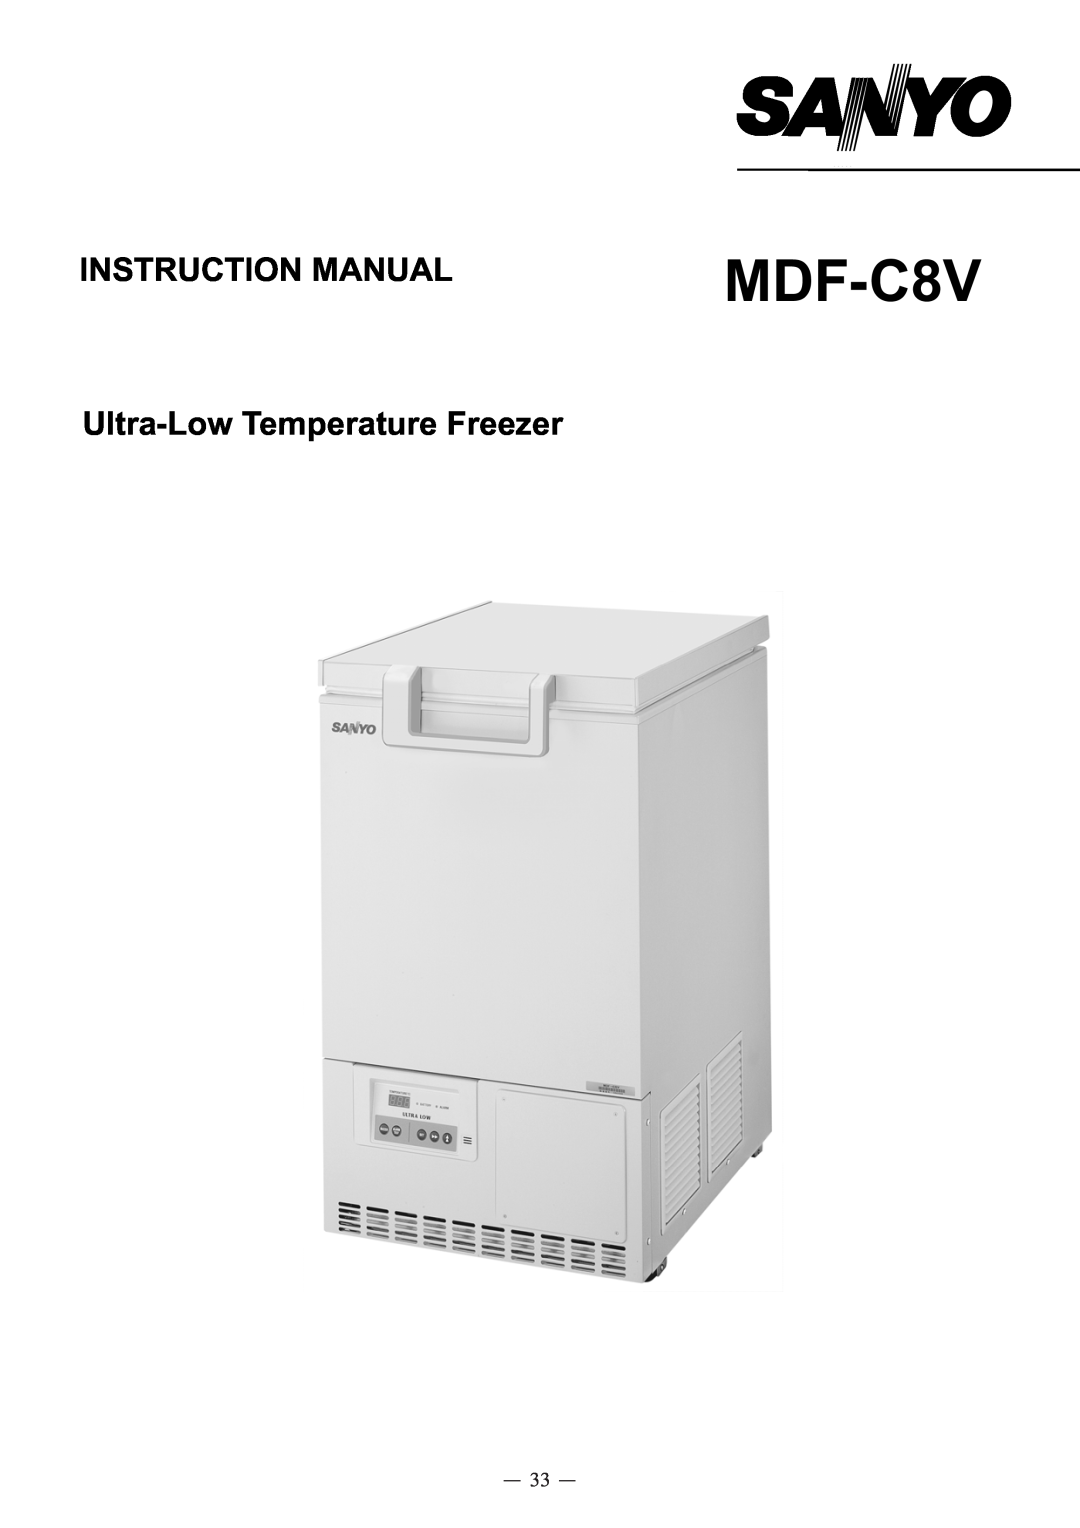 Sanyo MDF-C8V service manual INSTRUCTION MANUAL Ultra-LowTemperature Freezer 